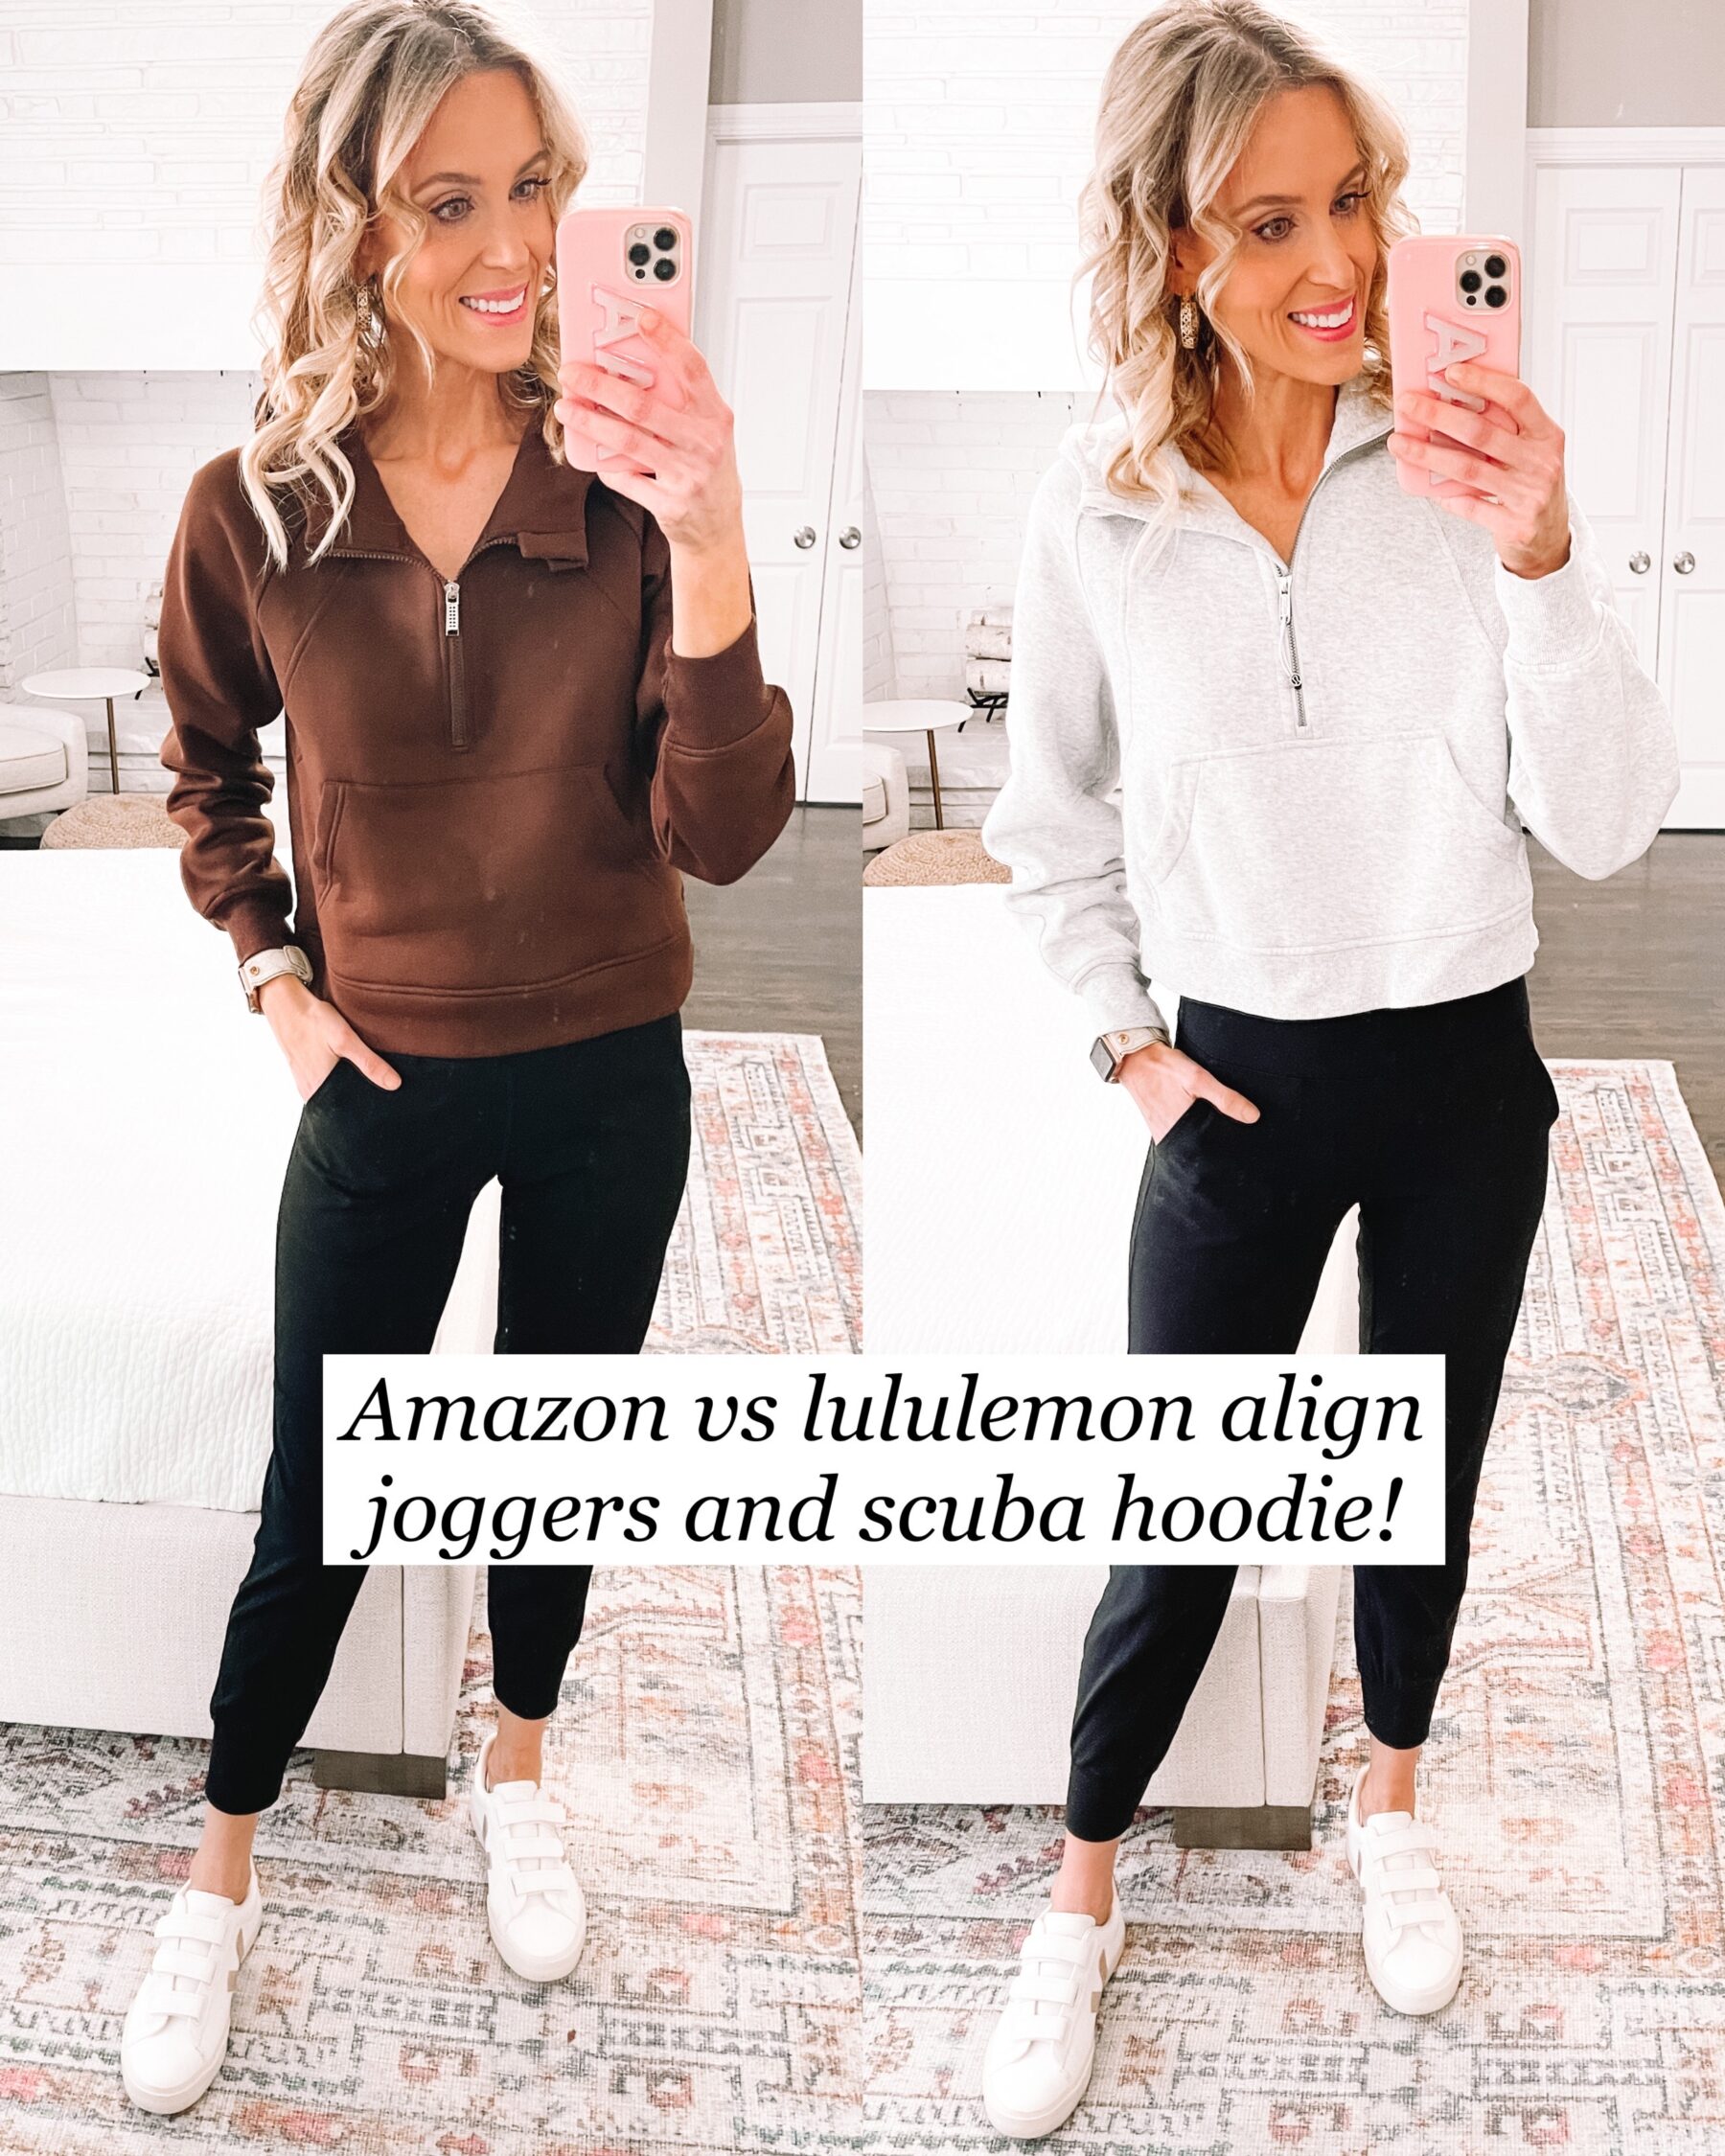 Lululemon Align joggers Gray Women's Size 6 